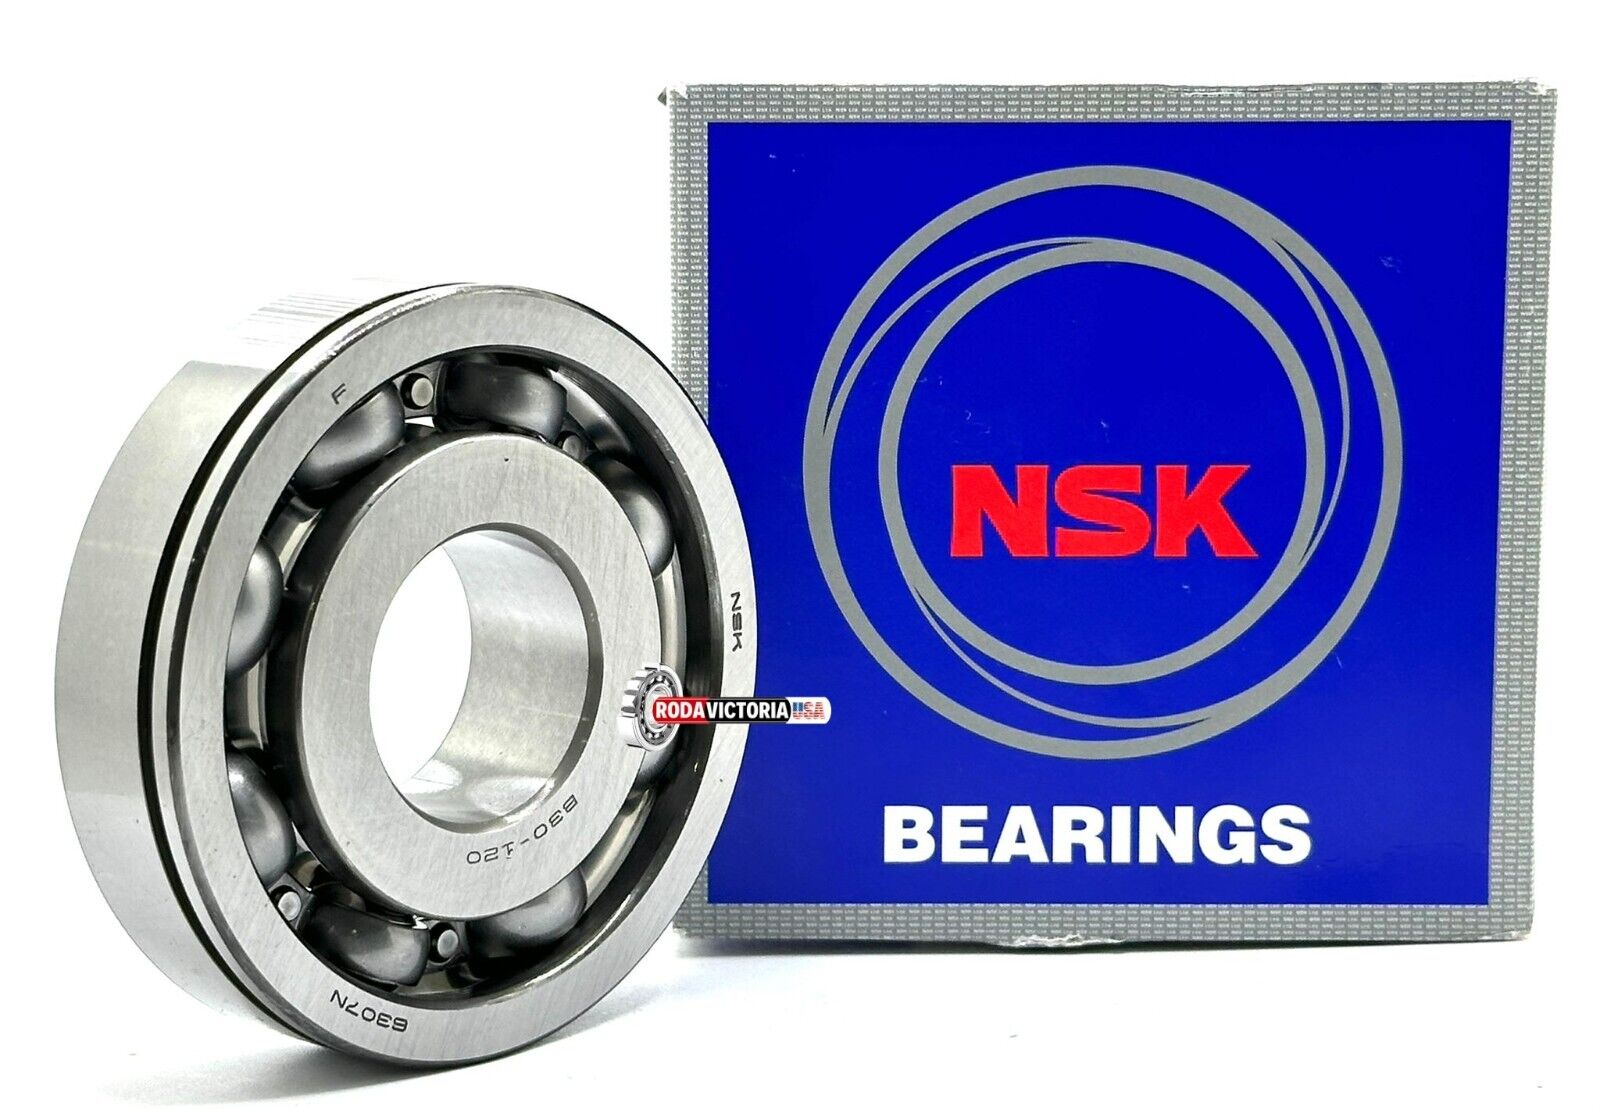 NSK JAPAN B30-120 C3 TRANSFER CTRANSFER CASE GEAR BEARING 90363-30014  35x80x21mm